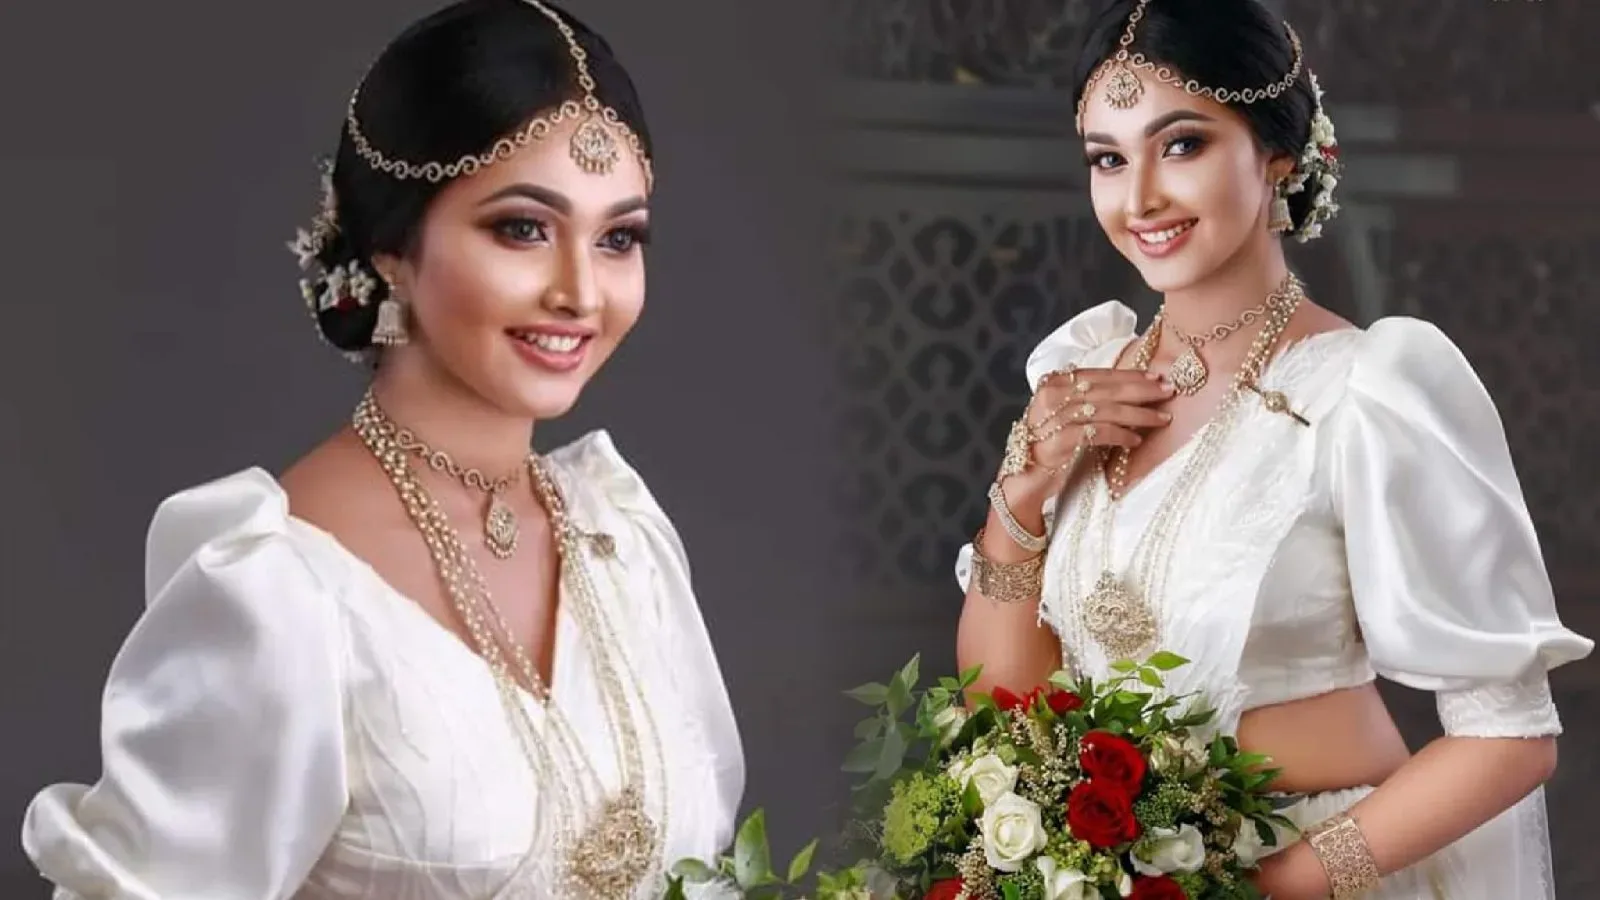 The actress Duneesha Piumi looks beautiful in Sinhalese Bridal Saree